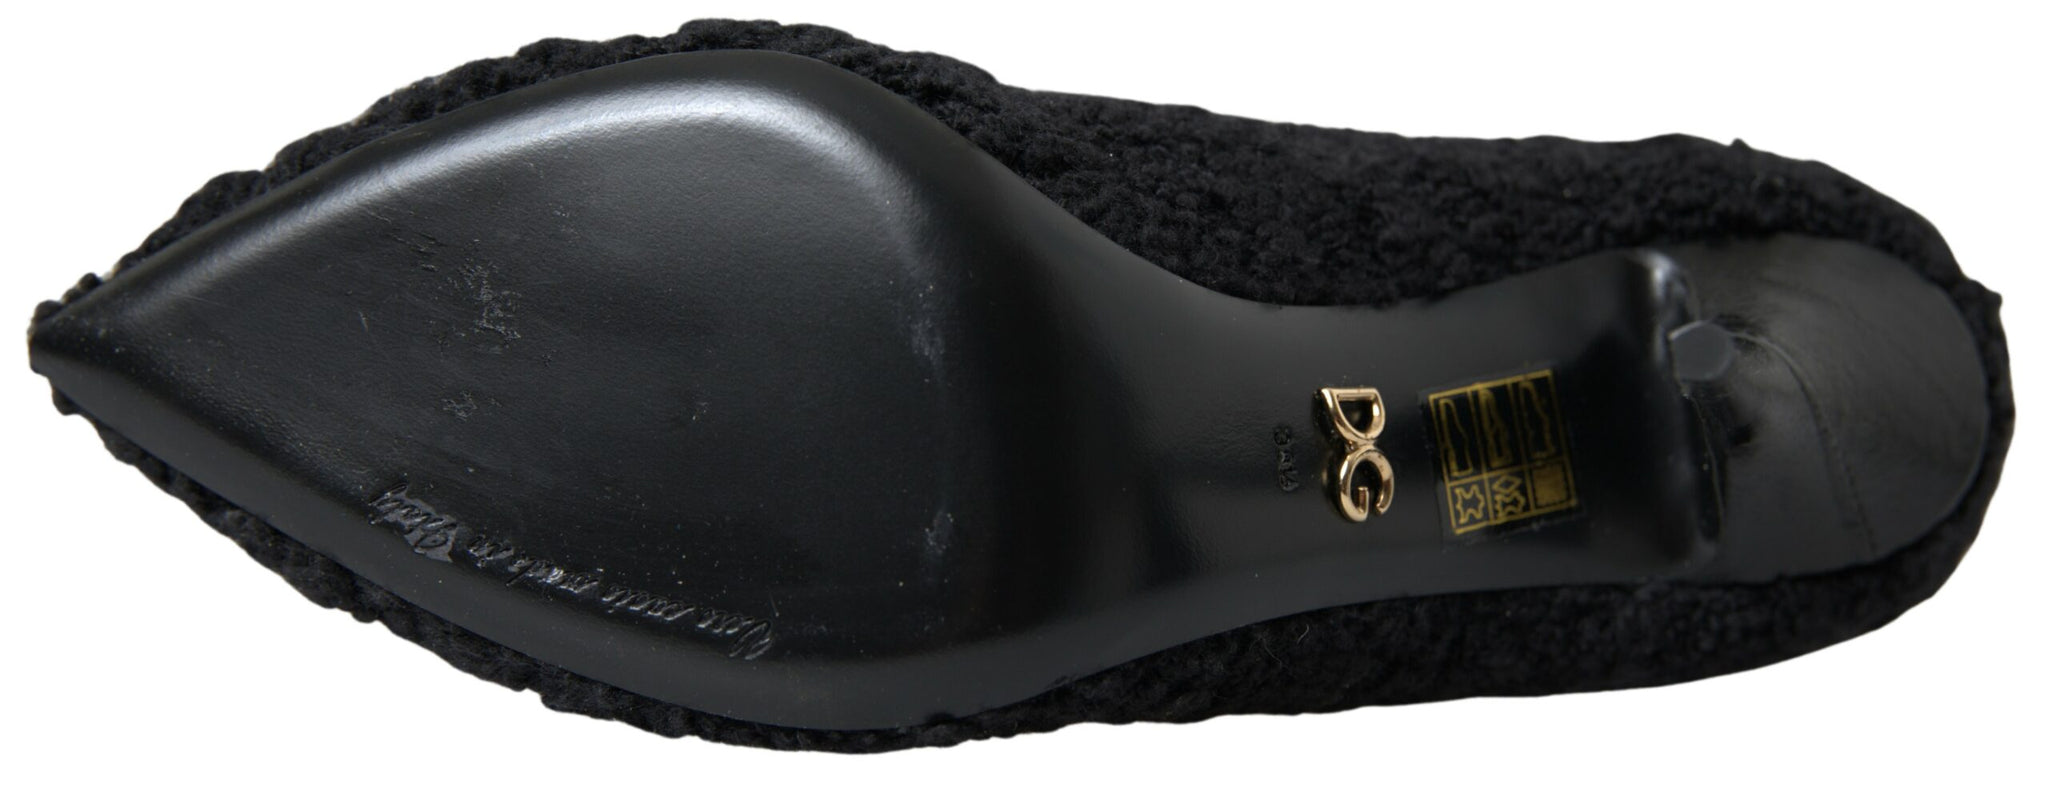 Dolce & Gabbana Black Stiletto Heels Mid Calf Boots